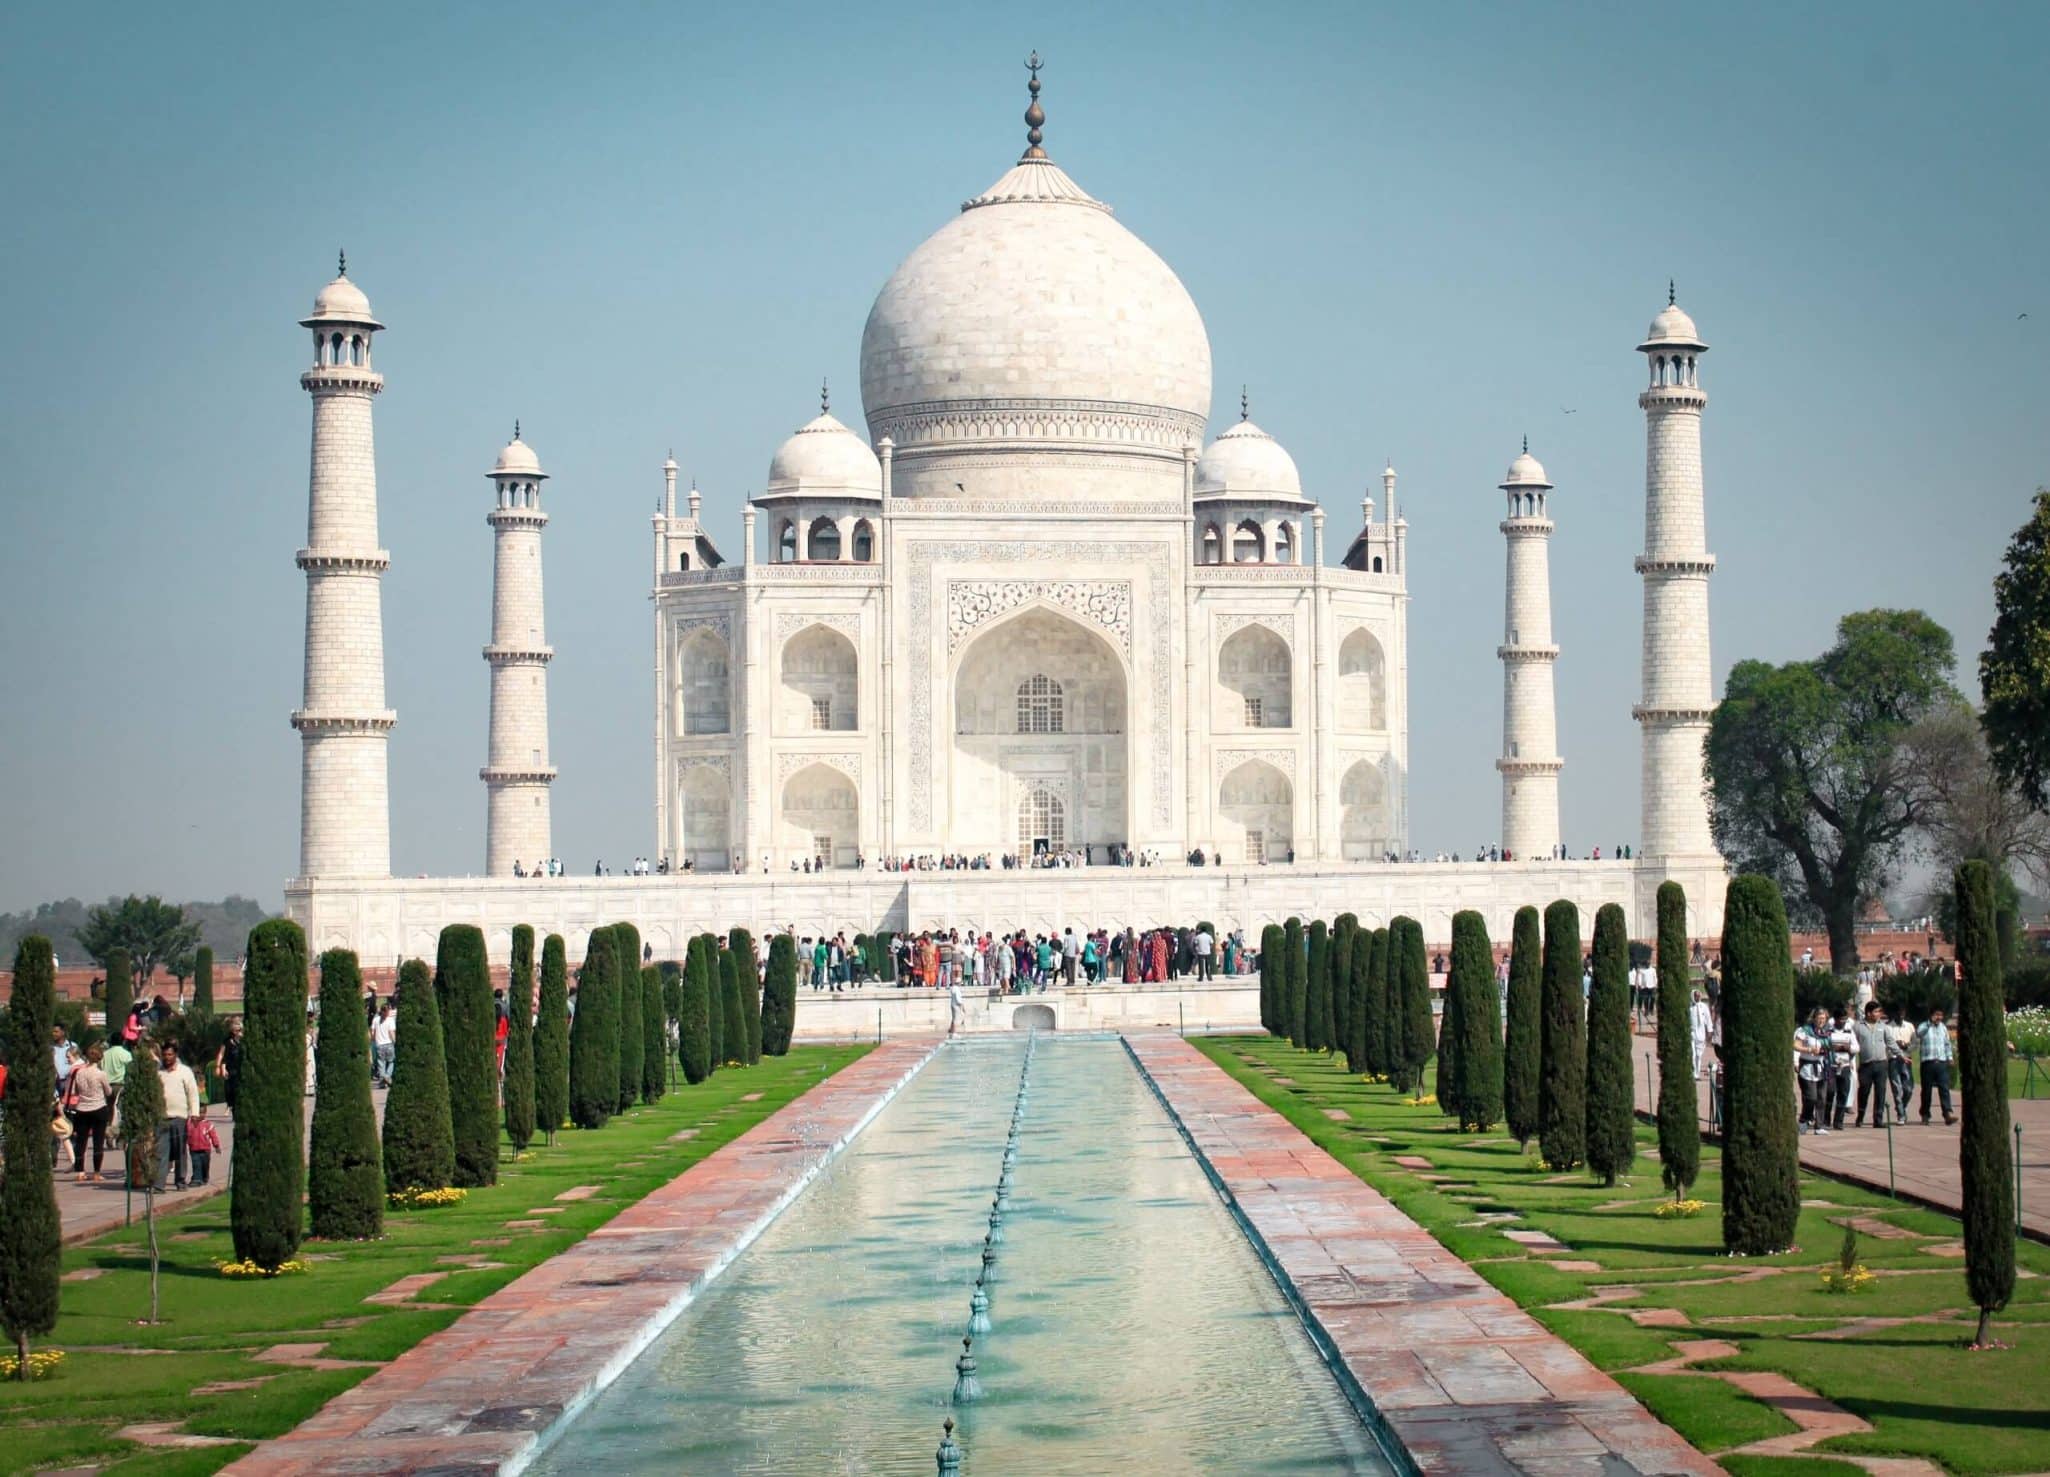 10 tips for an amazing Taj Mahal visit